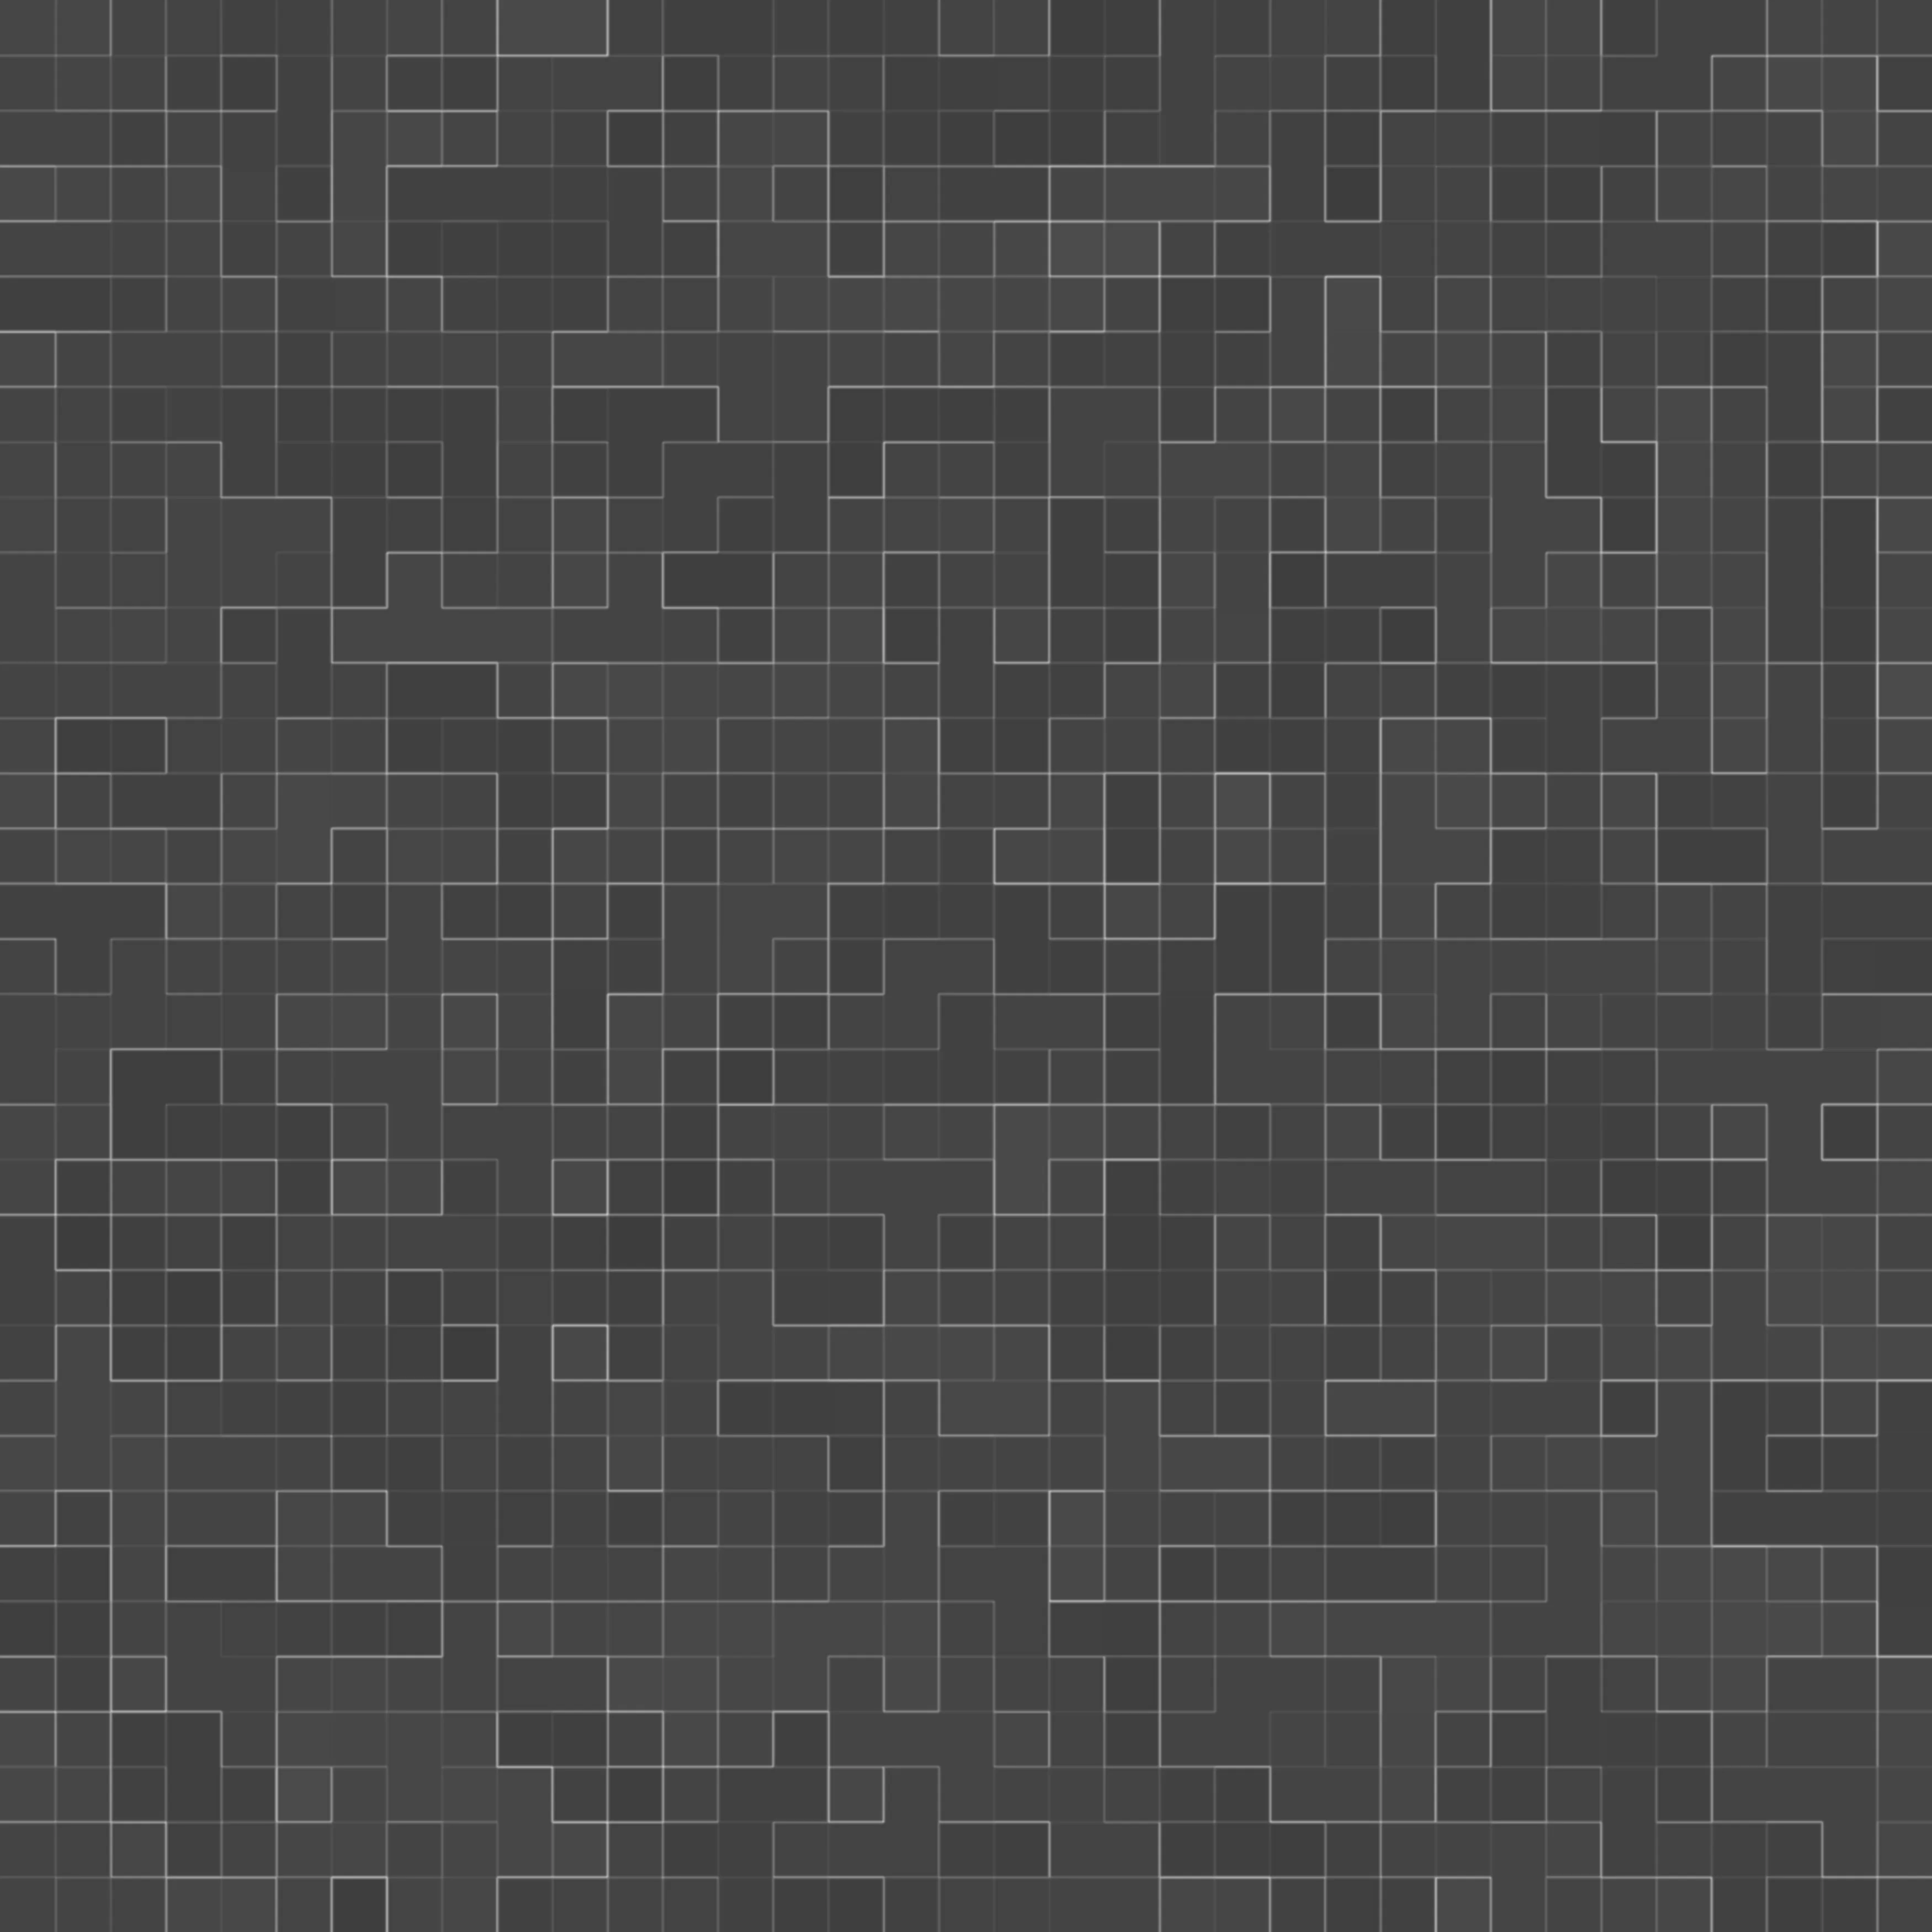 Background image showing grid.